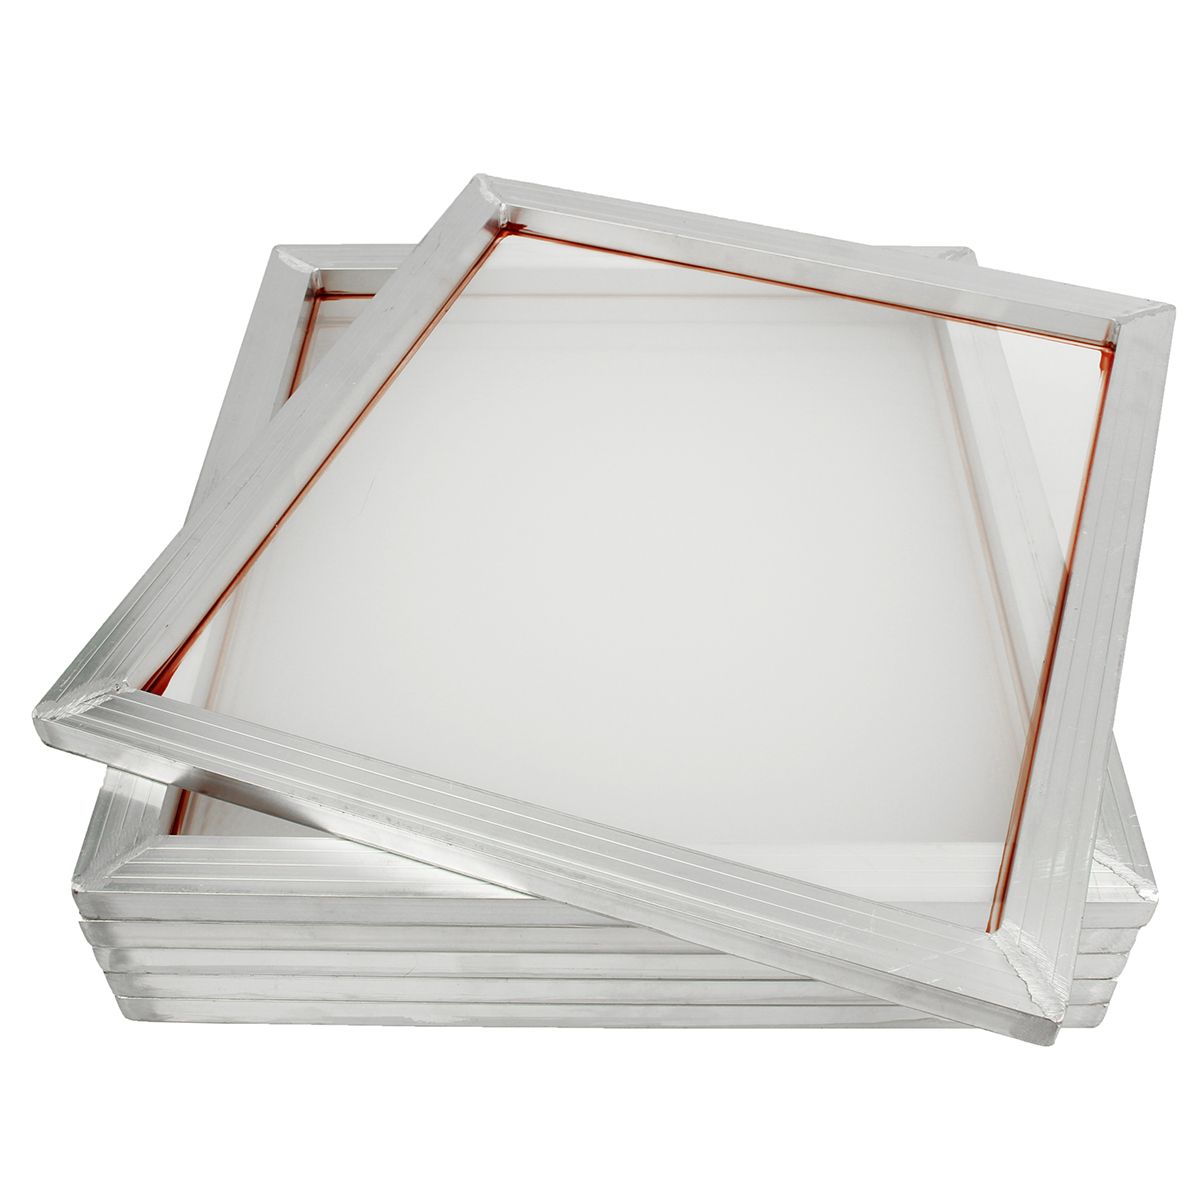 6Pcs-Aluminum-Profile-Silk-Screen-Printing-Frame-Press-Screens-110-White-Mesh-20quot-x-24quot-1443730